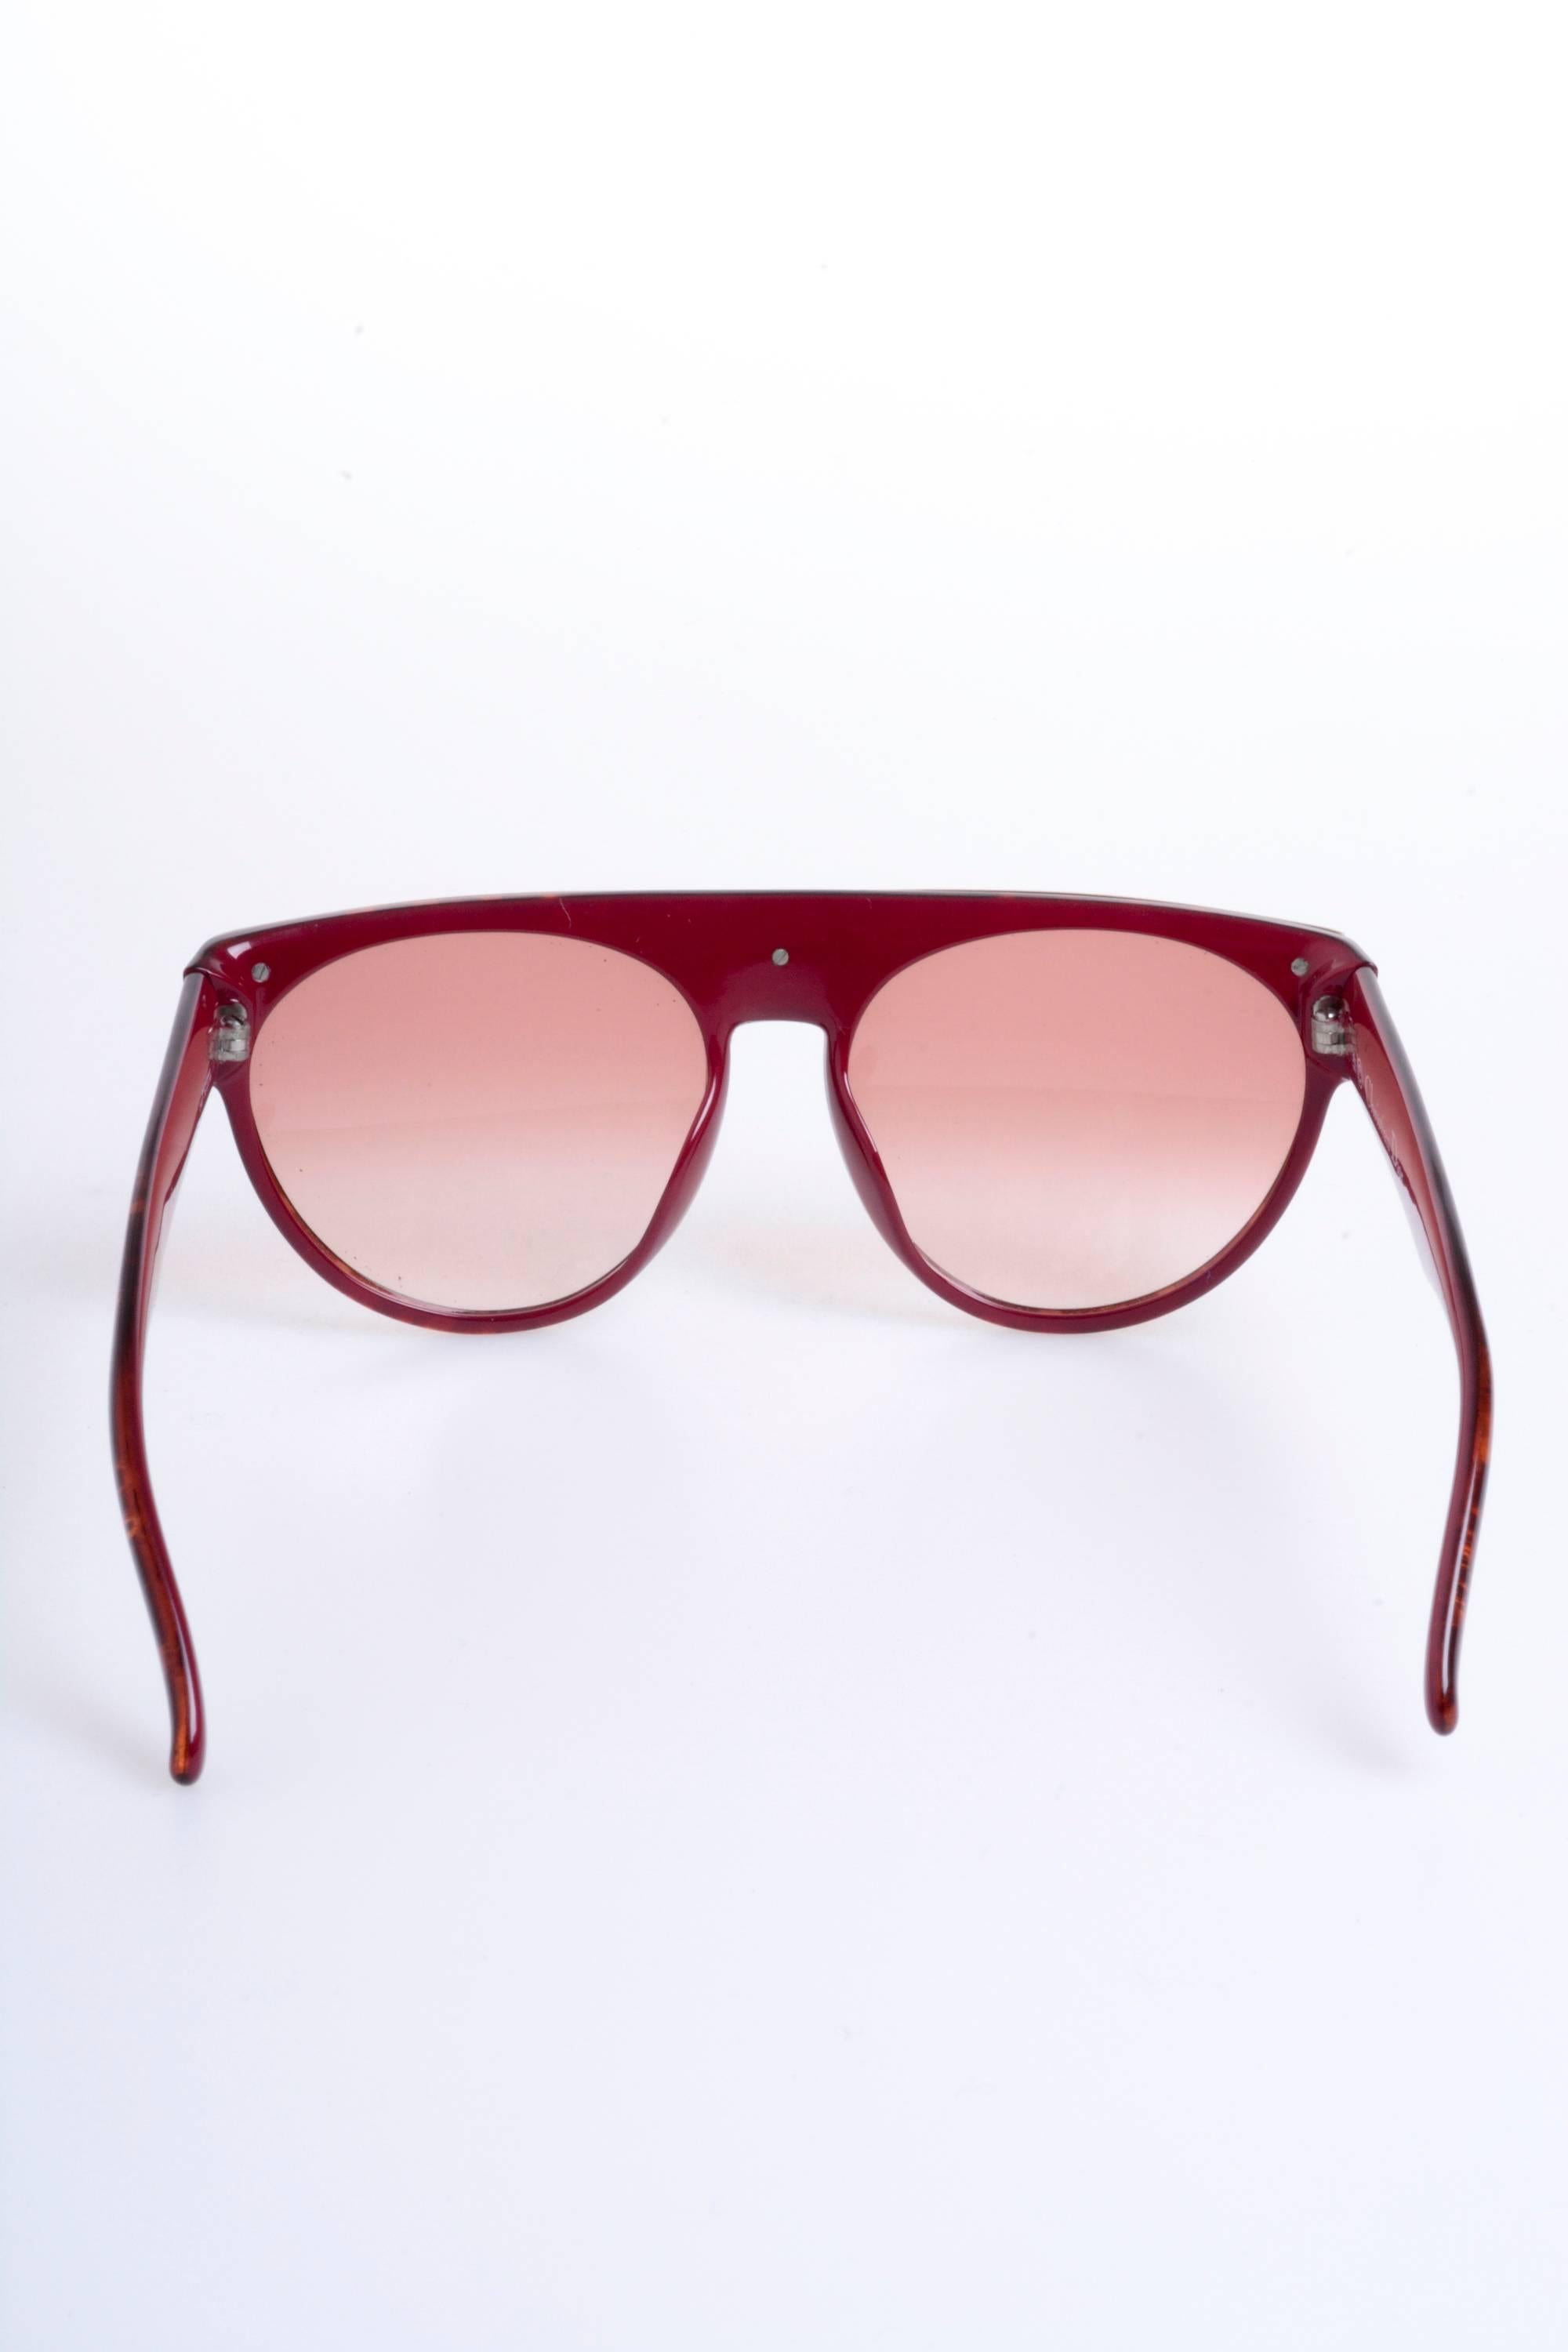 Beige 1980s Christian Dior Sunglasses For Sale